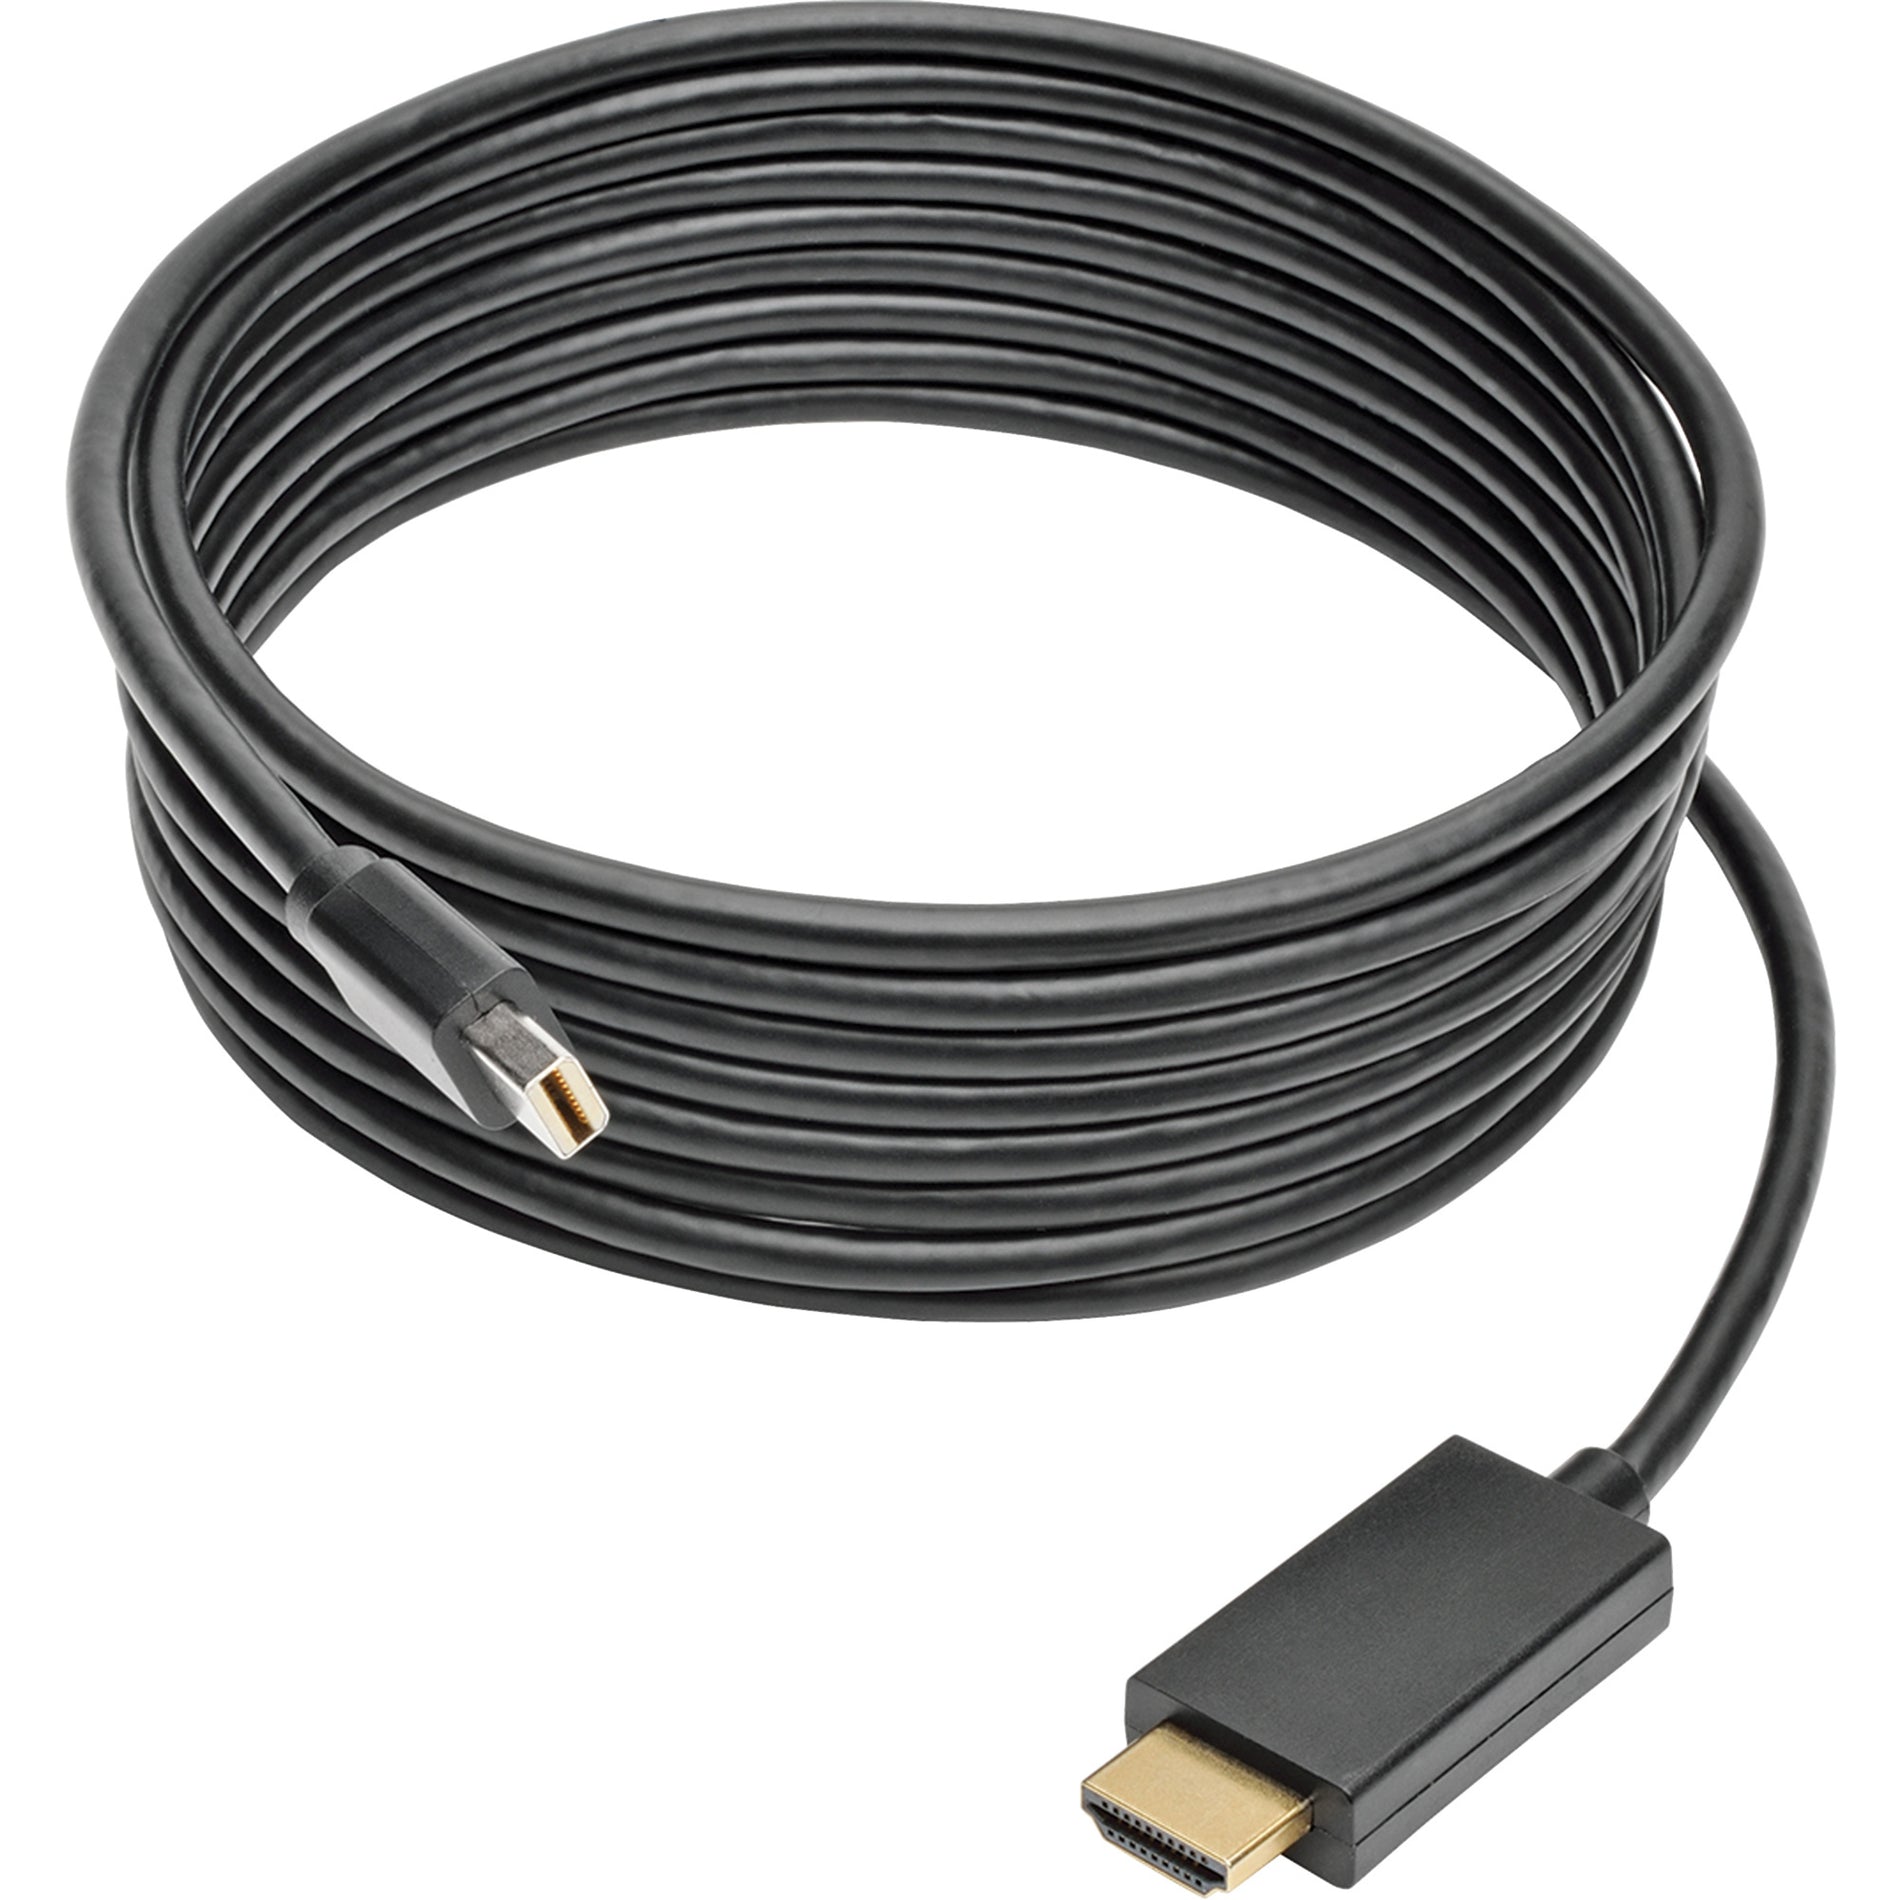 Tripp Lite P586-012-HDMI Mini DisplayPort to HD Cable Adapter, 12ft, Black